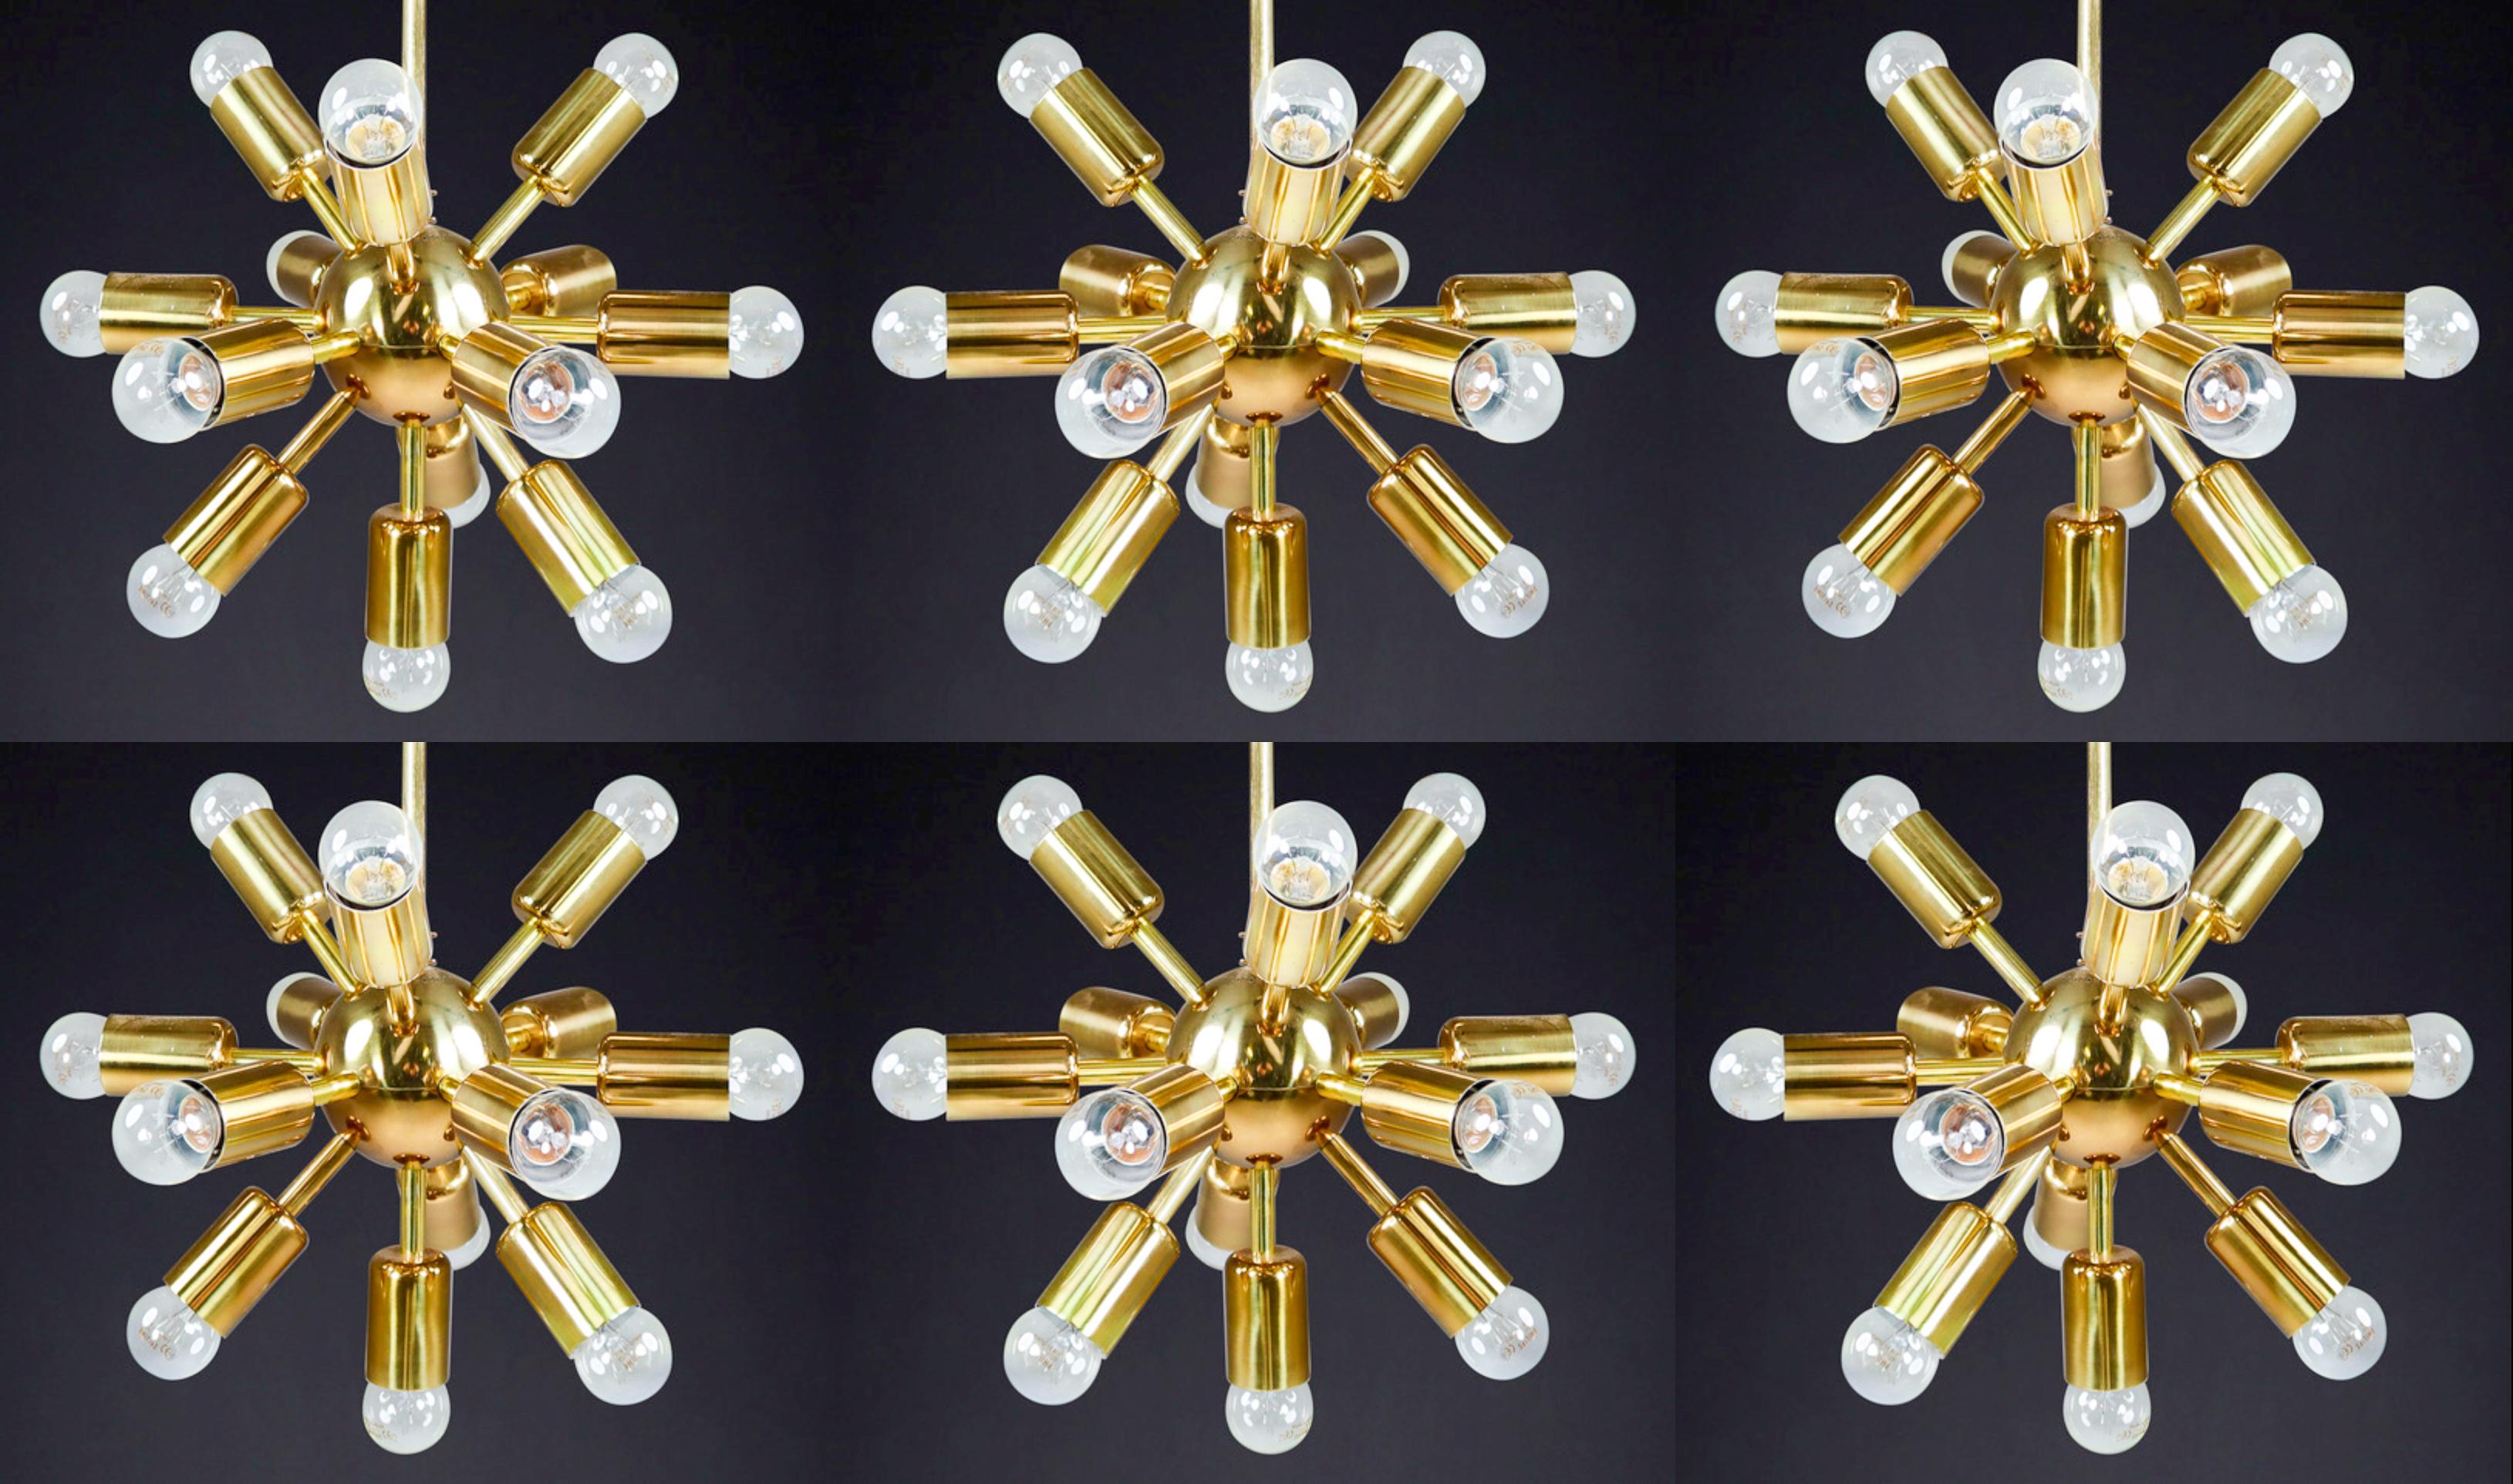 Midcentury Brass Sputnik Chandeliers with Twelve Lights by Drupol, Praque 1960s For Sale 4